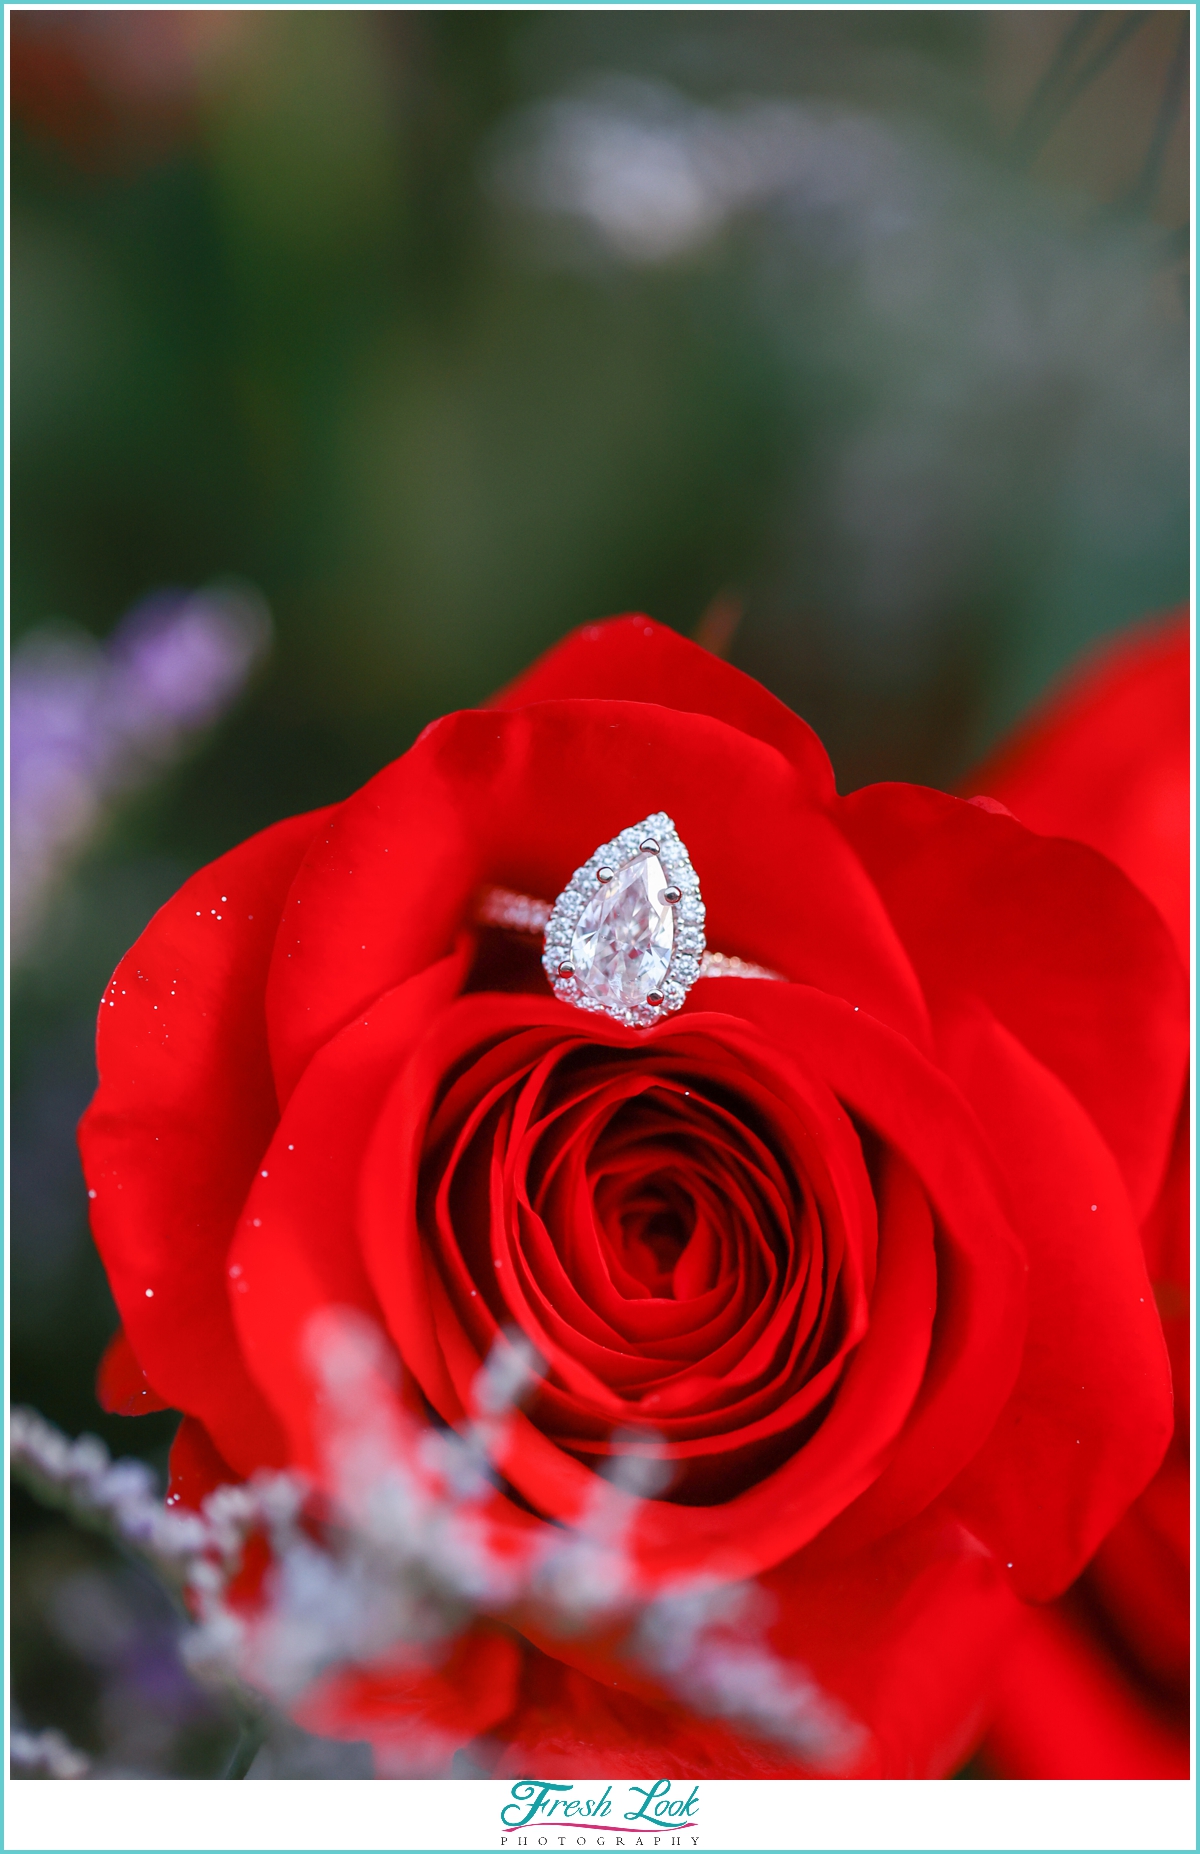 pear diamond engagement ring details